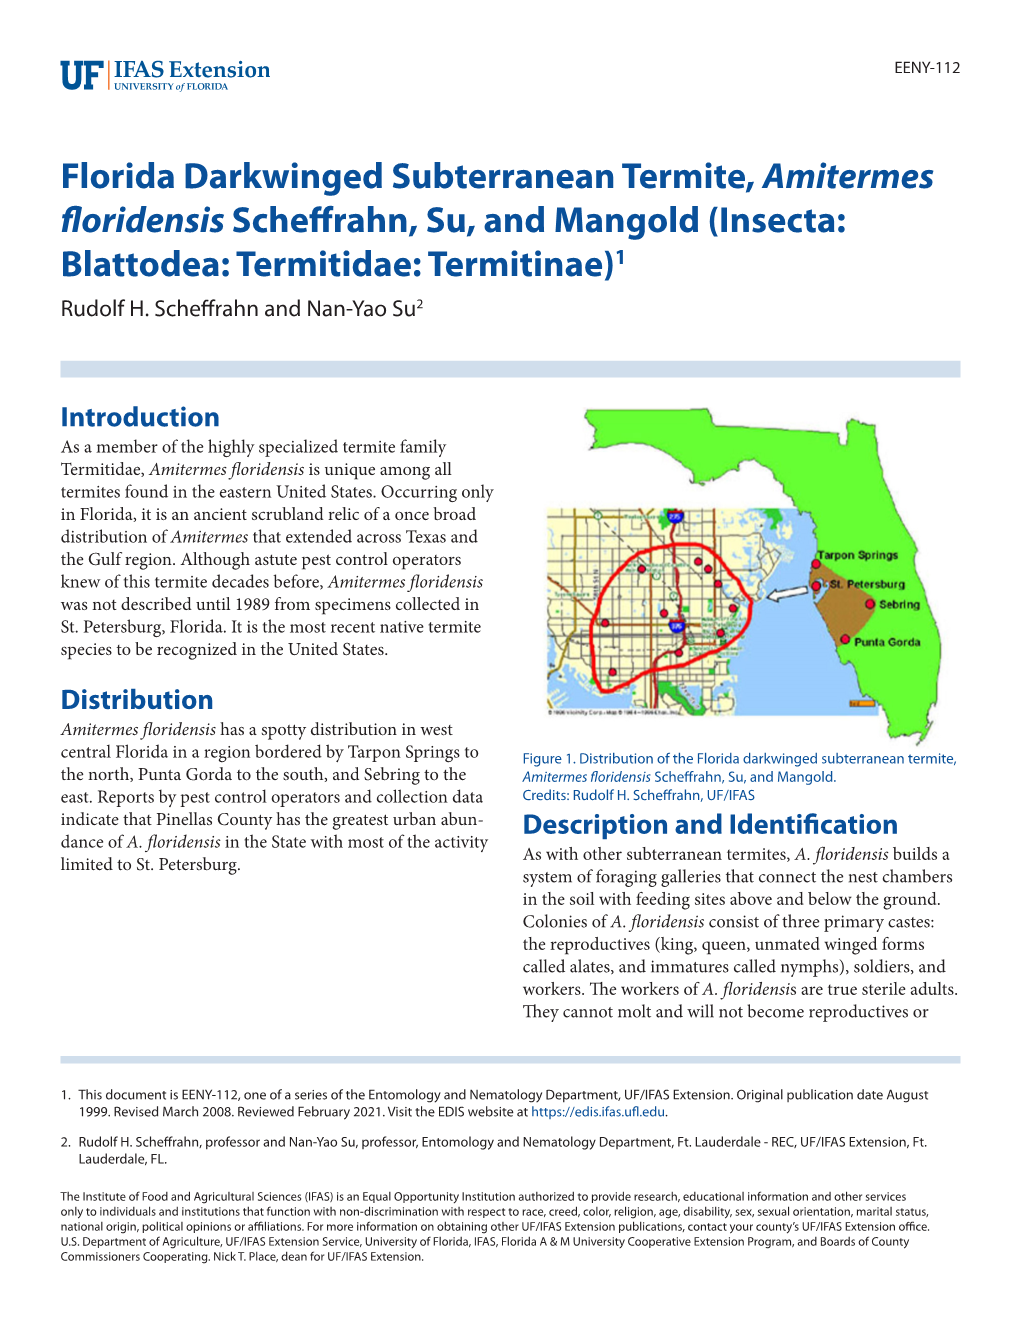 Florida Darkwinged Subterranean Termite, Amitermes Floridensisscheffrahn, Su, and Mangold (Insecta: Blattodea: Termitidae: Termitinae)1 Rudolf H